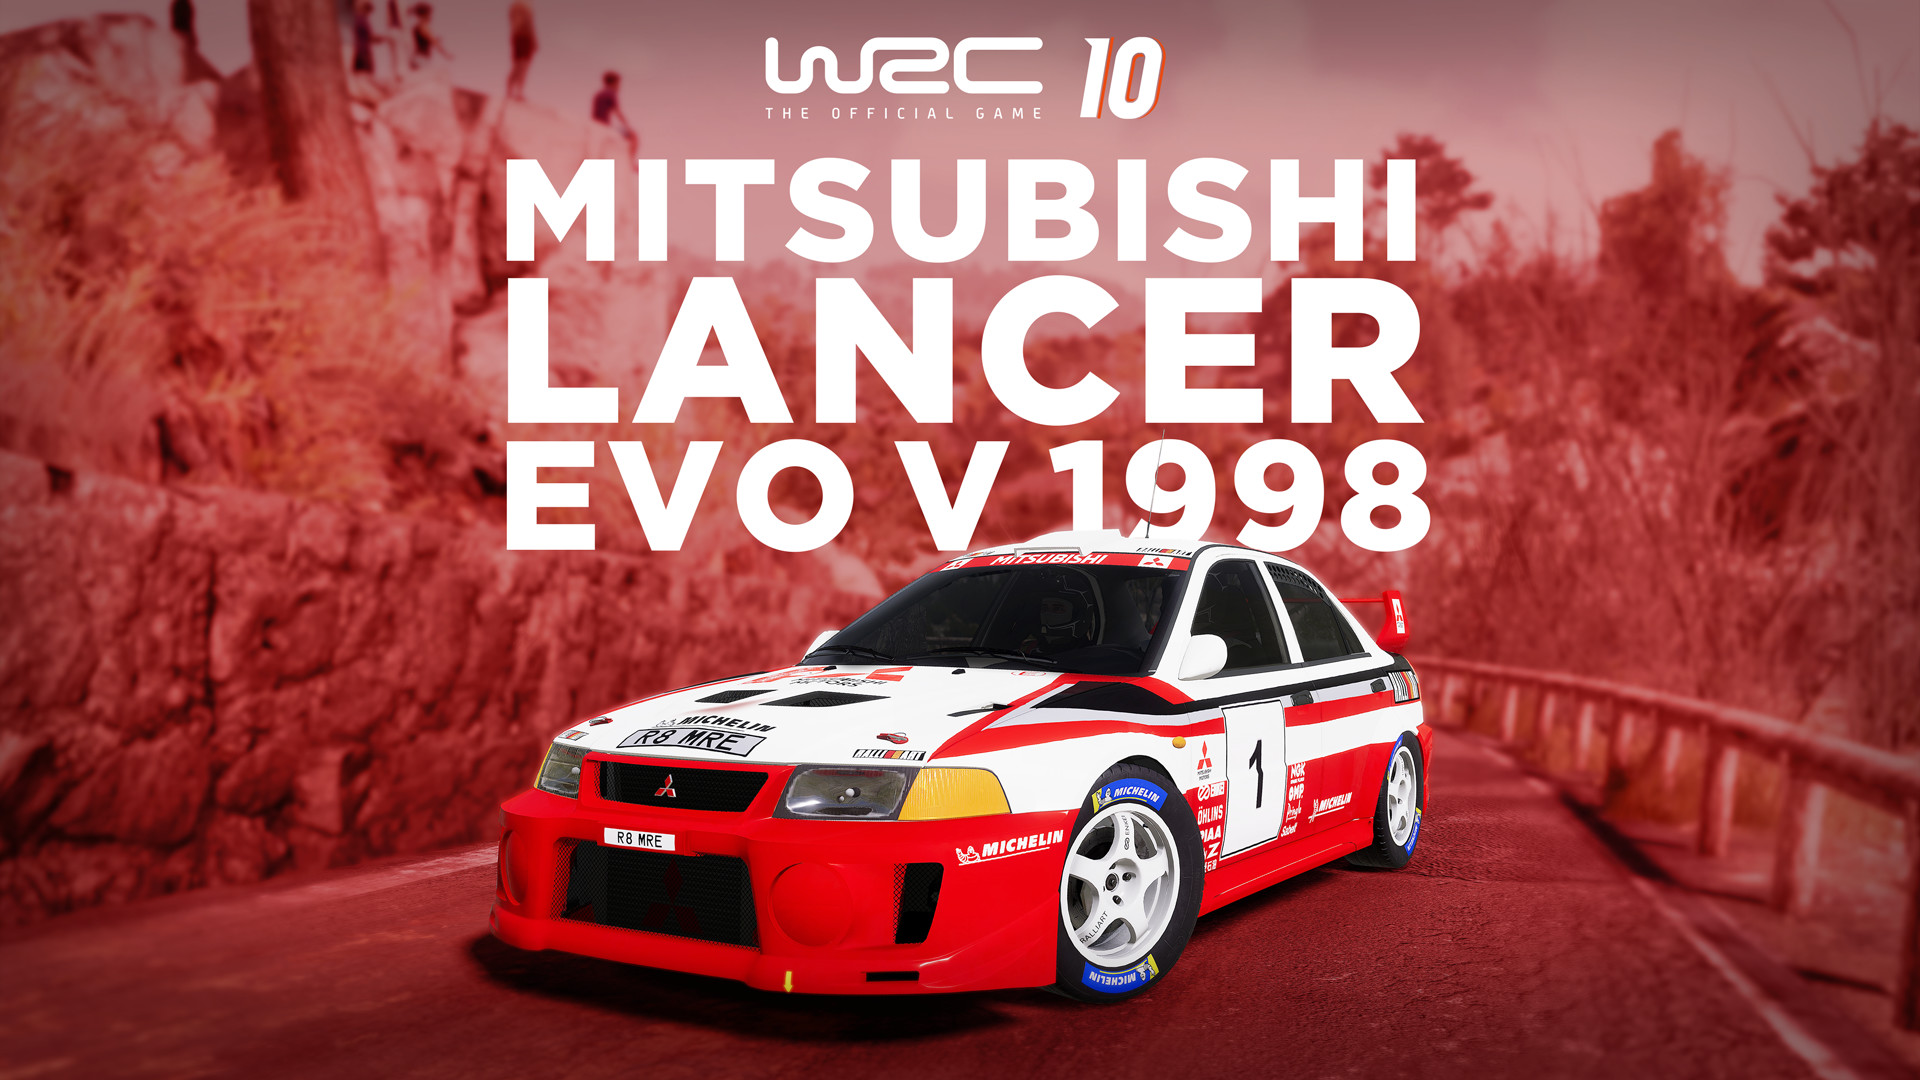 WRC 10 - Mitsubishi Lancer Evo V 1998 DLC Steam CD Key 2.69 usd